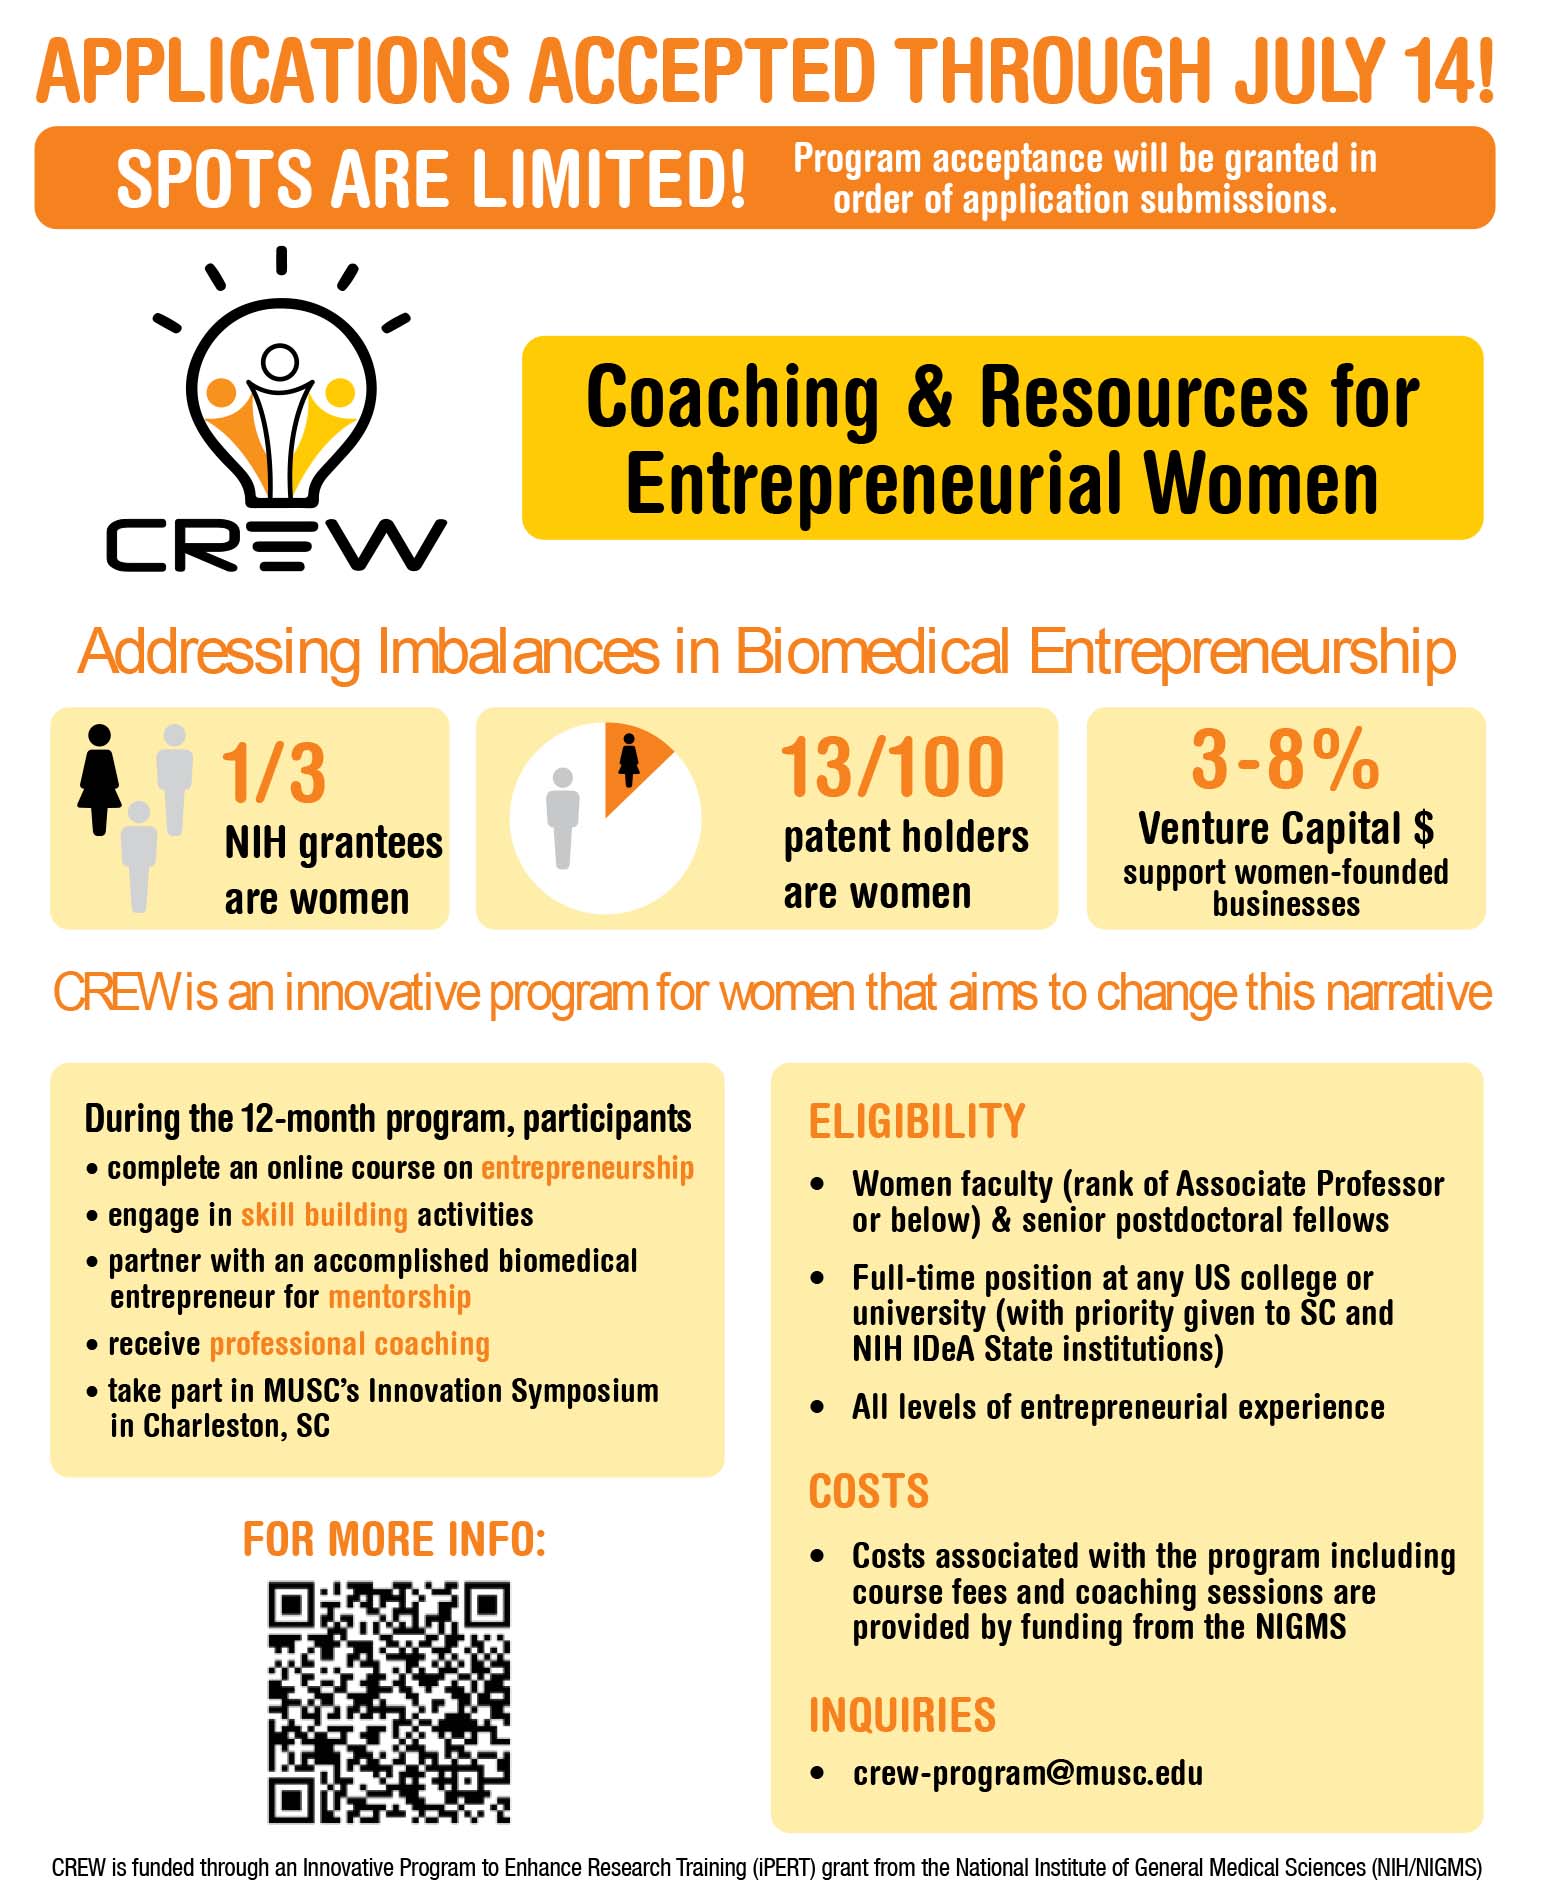 Coaching & Resources for Entrepreneurial Women